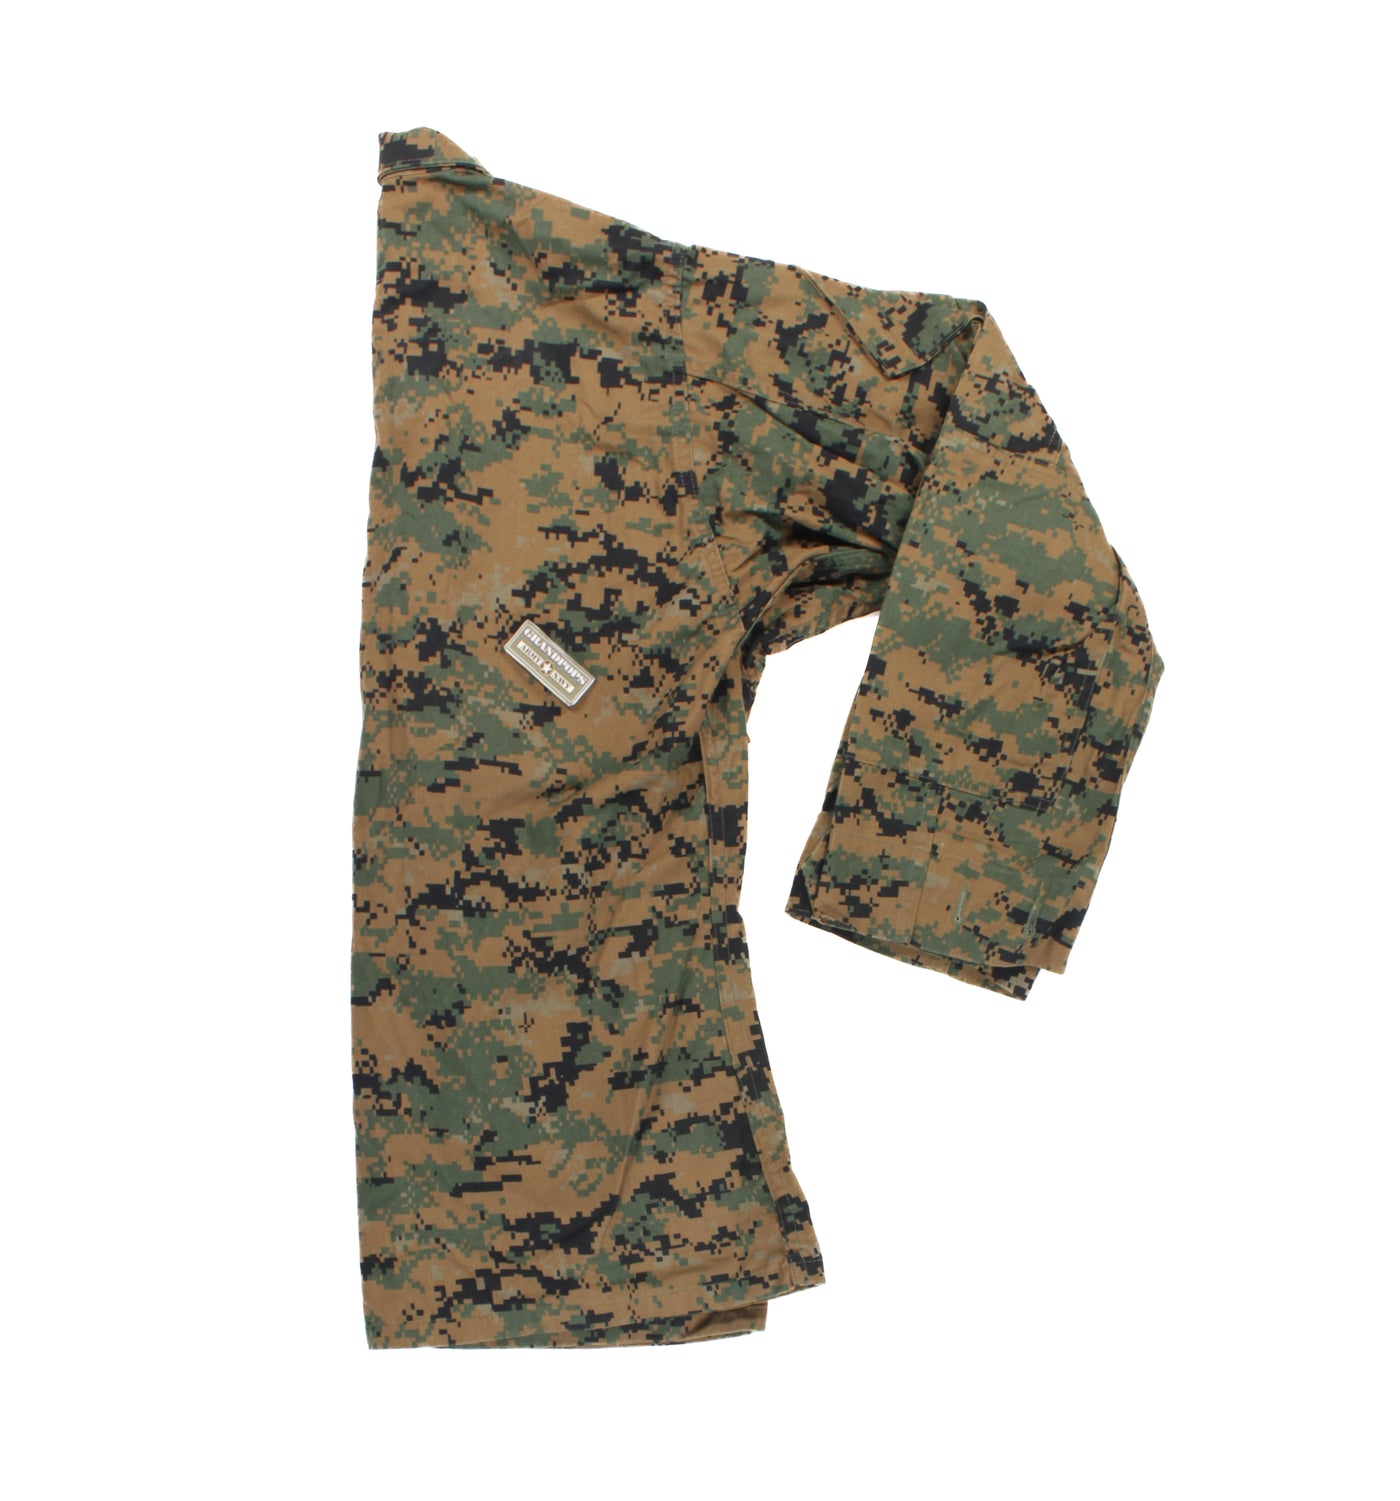 USMC MARPAT Uniform WOODLAND SET Combat Shirt Pant LARGE LONG LL ISSUED   eBay